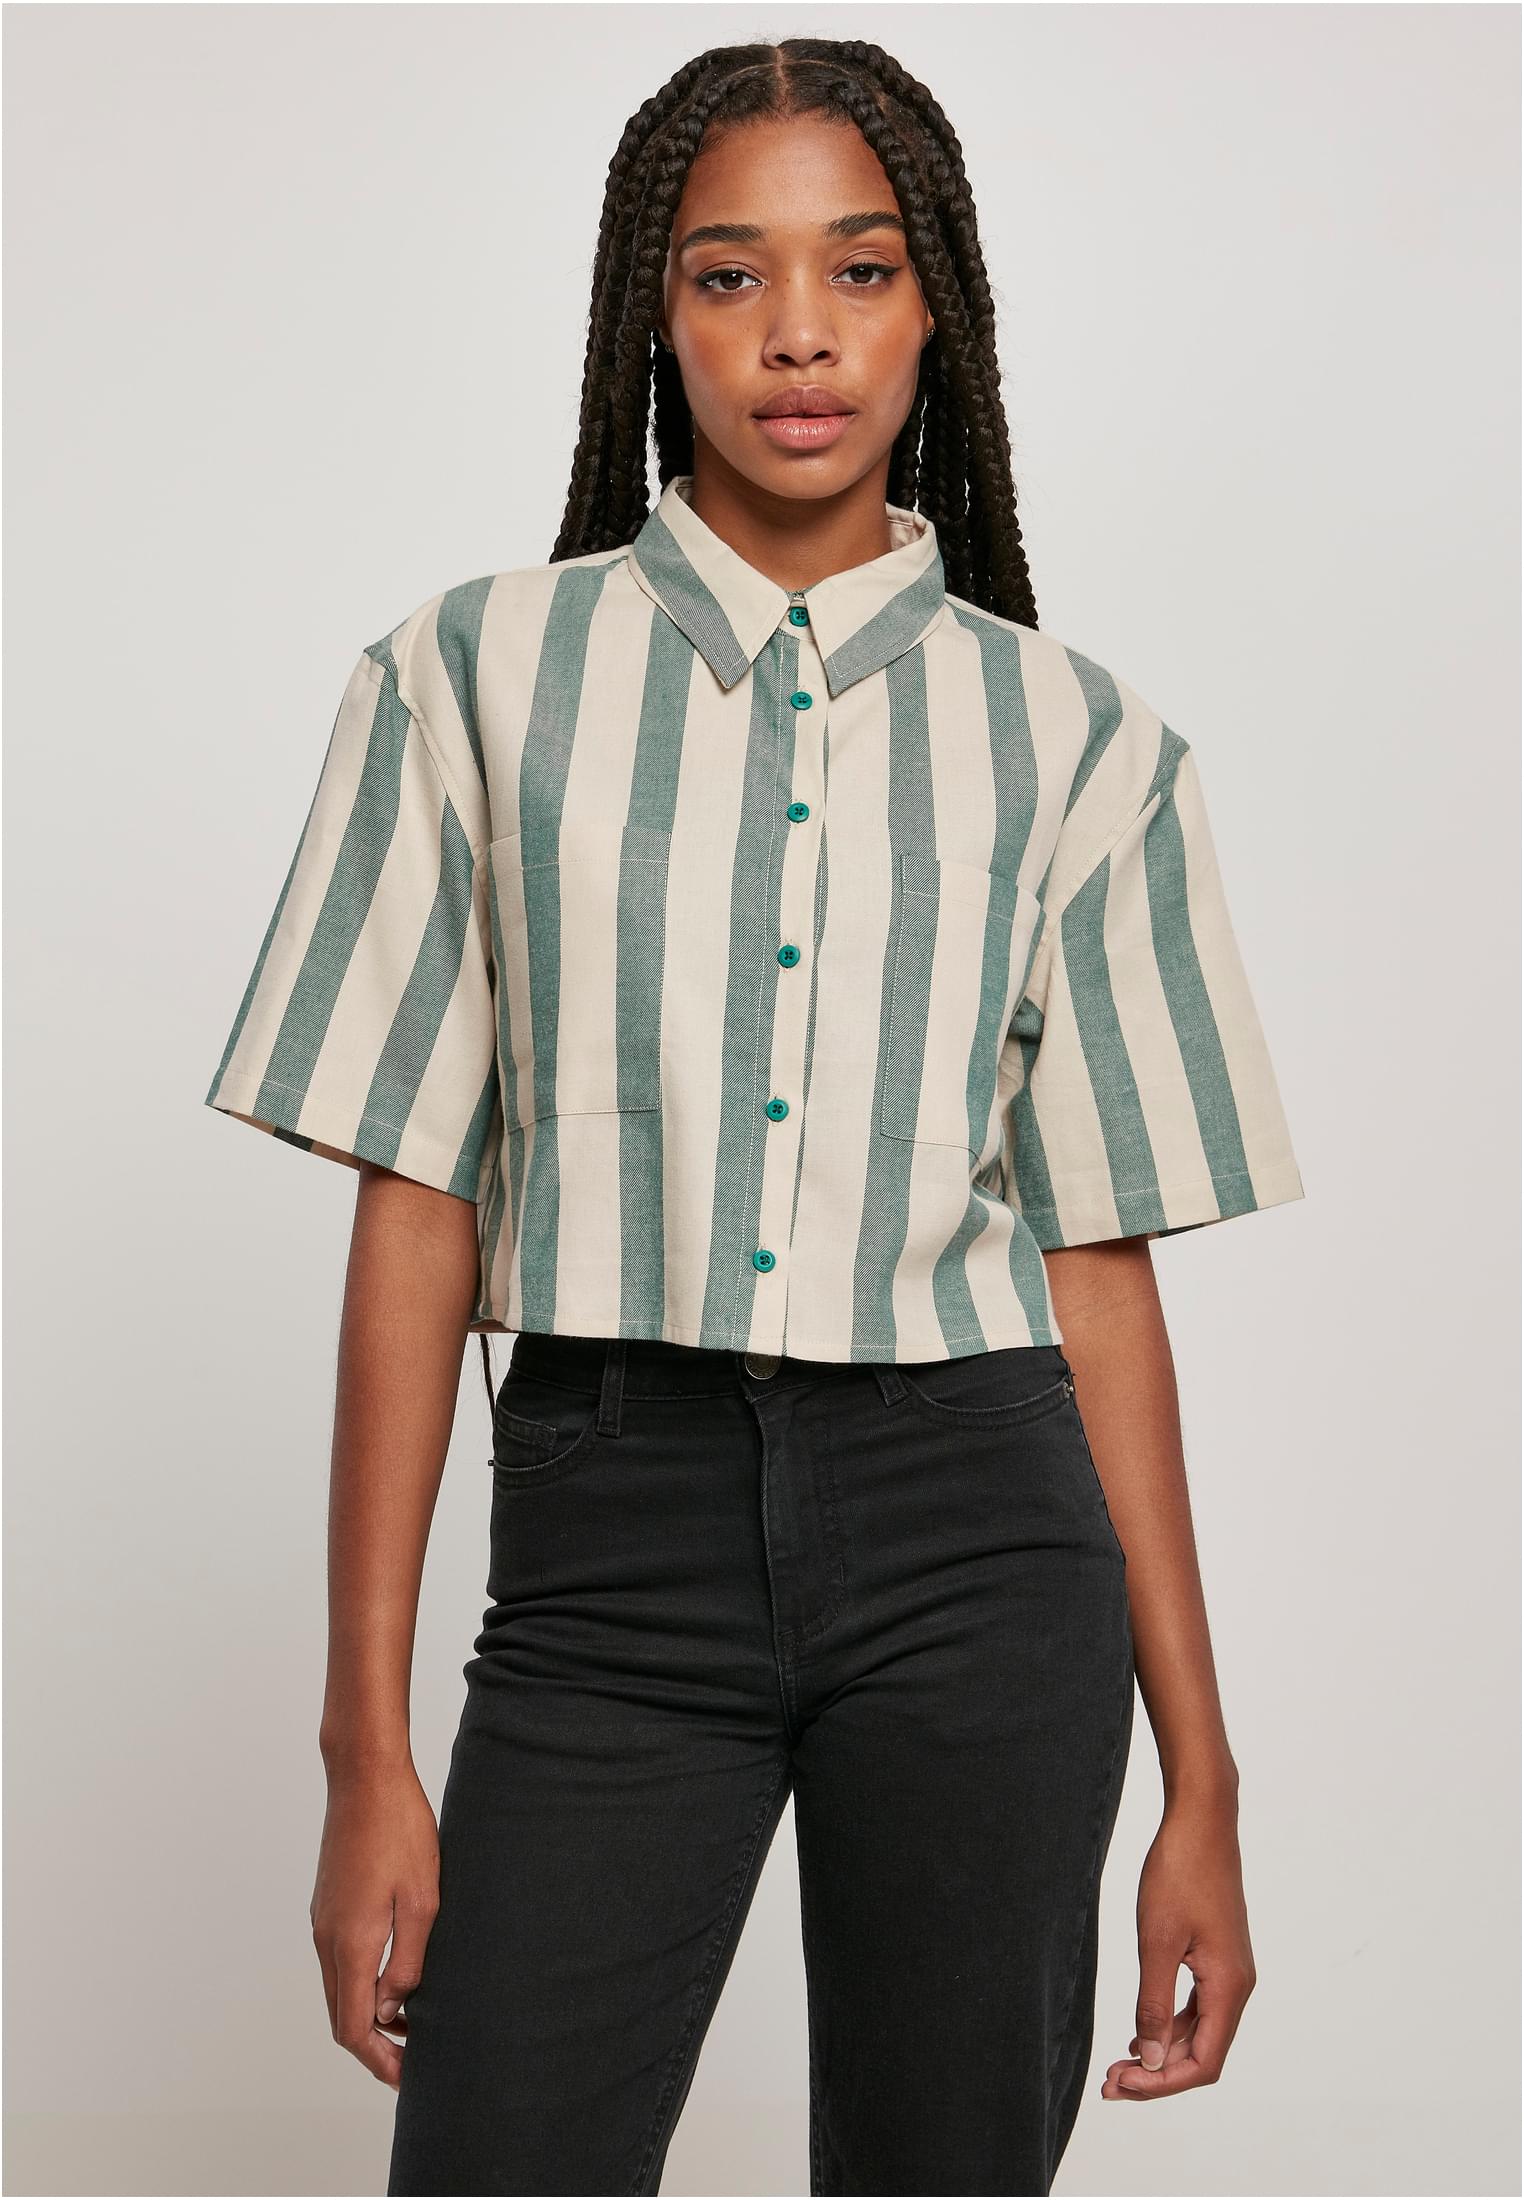 Women's short oversized striped greenlancer/softseagrass shirt